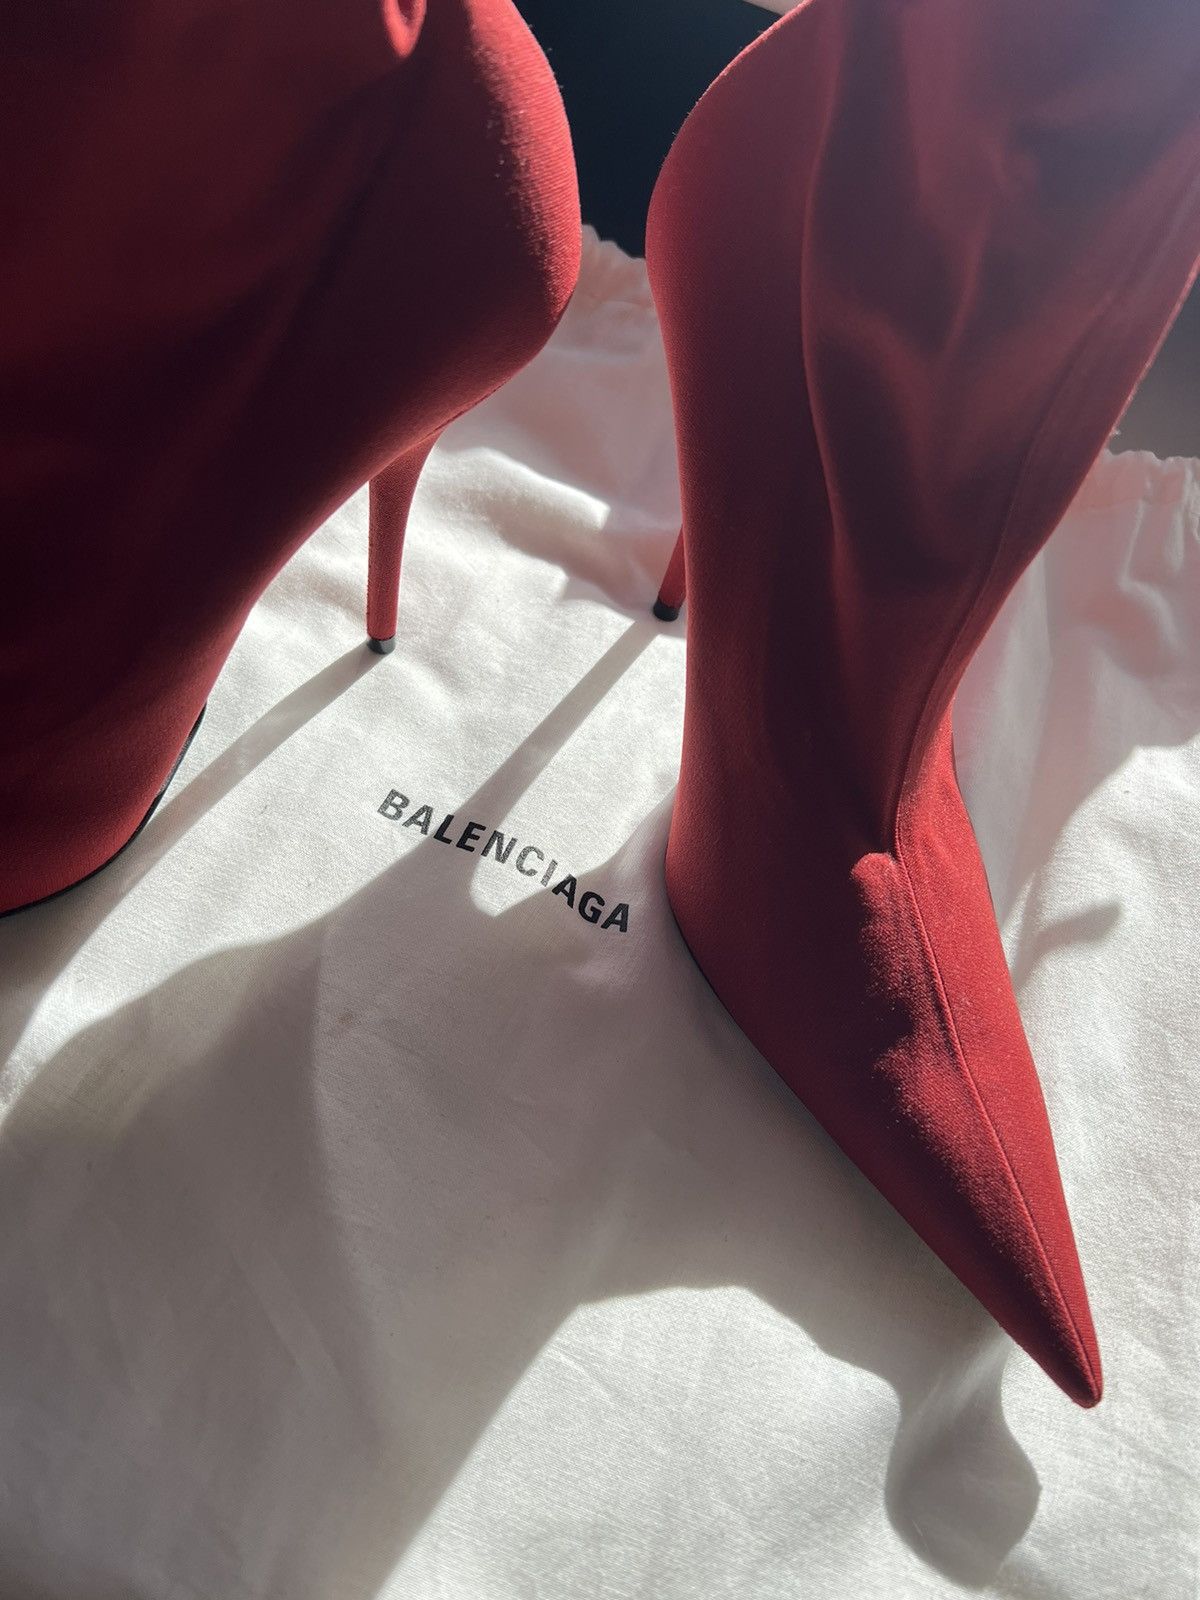 Balenciaga BALENCIAGA RED KNIFE SPANDEX SOCK BOOTS Size US 6.5 / IT 36.5 - 2 Preview